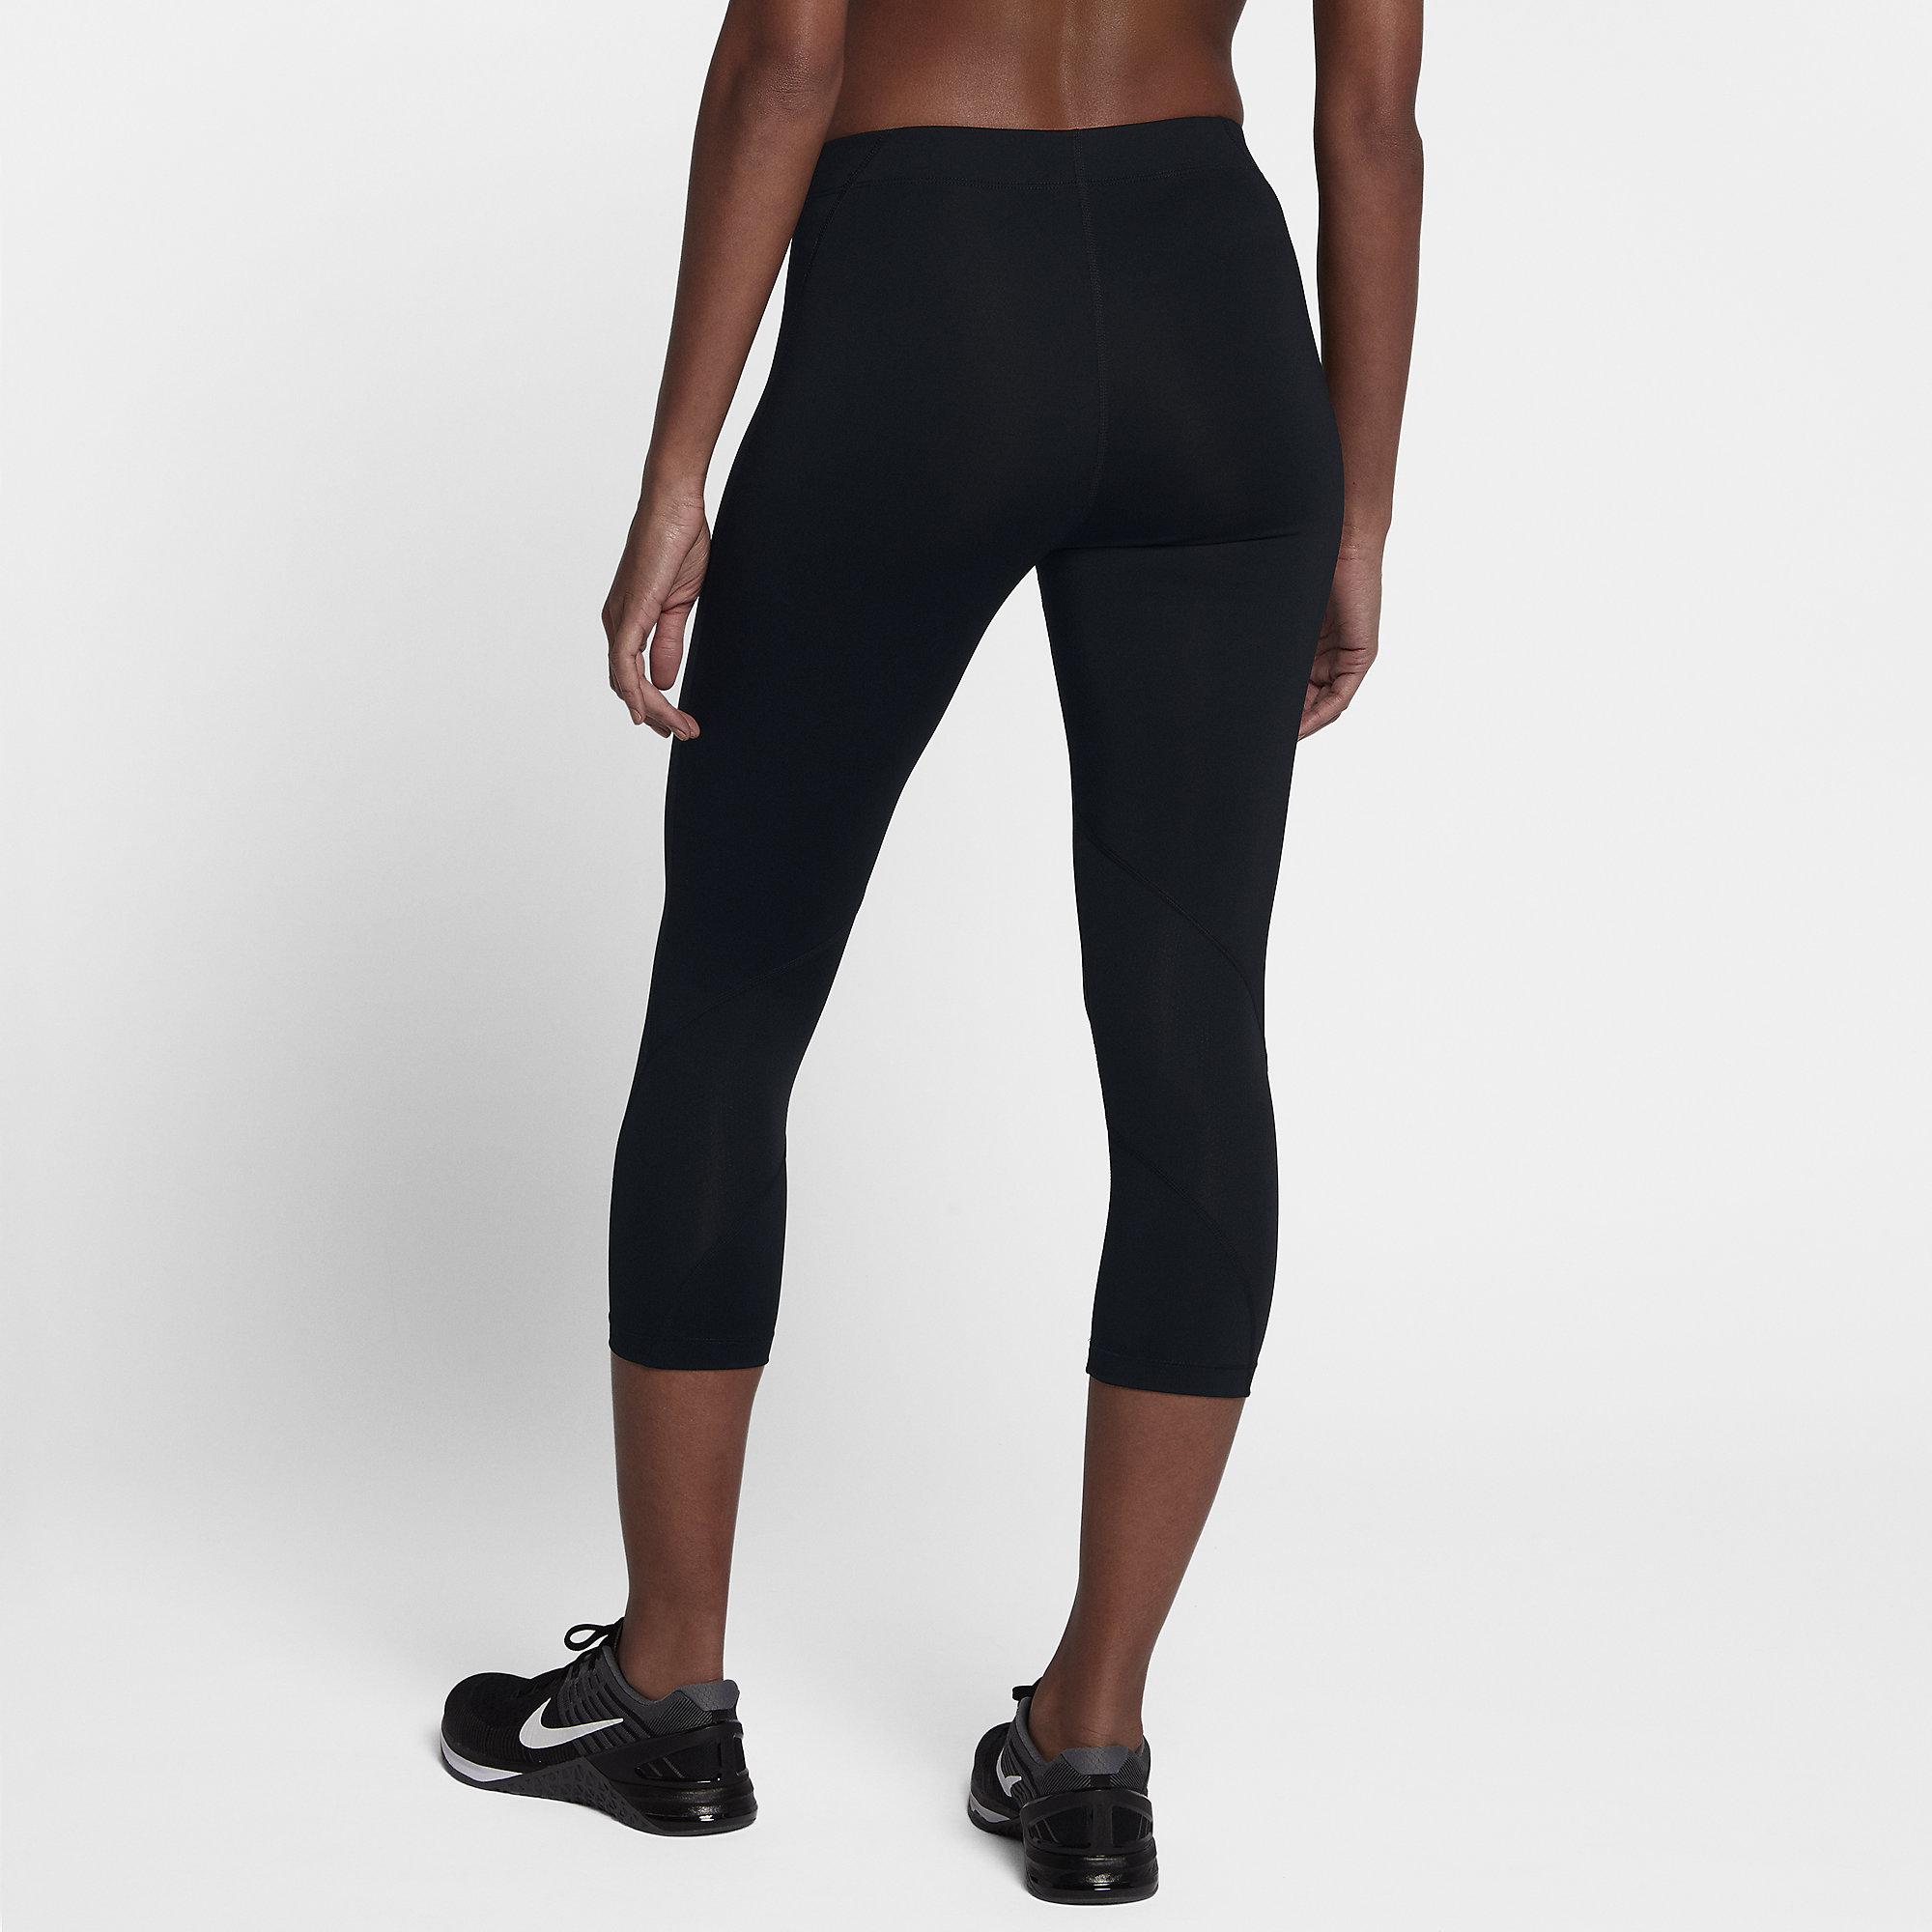 Nike Womens Pro Capri Leggings - Black/White - Tennisnuts.com